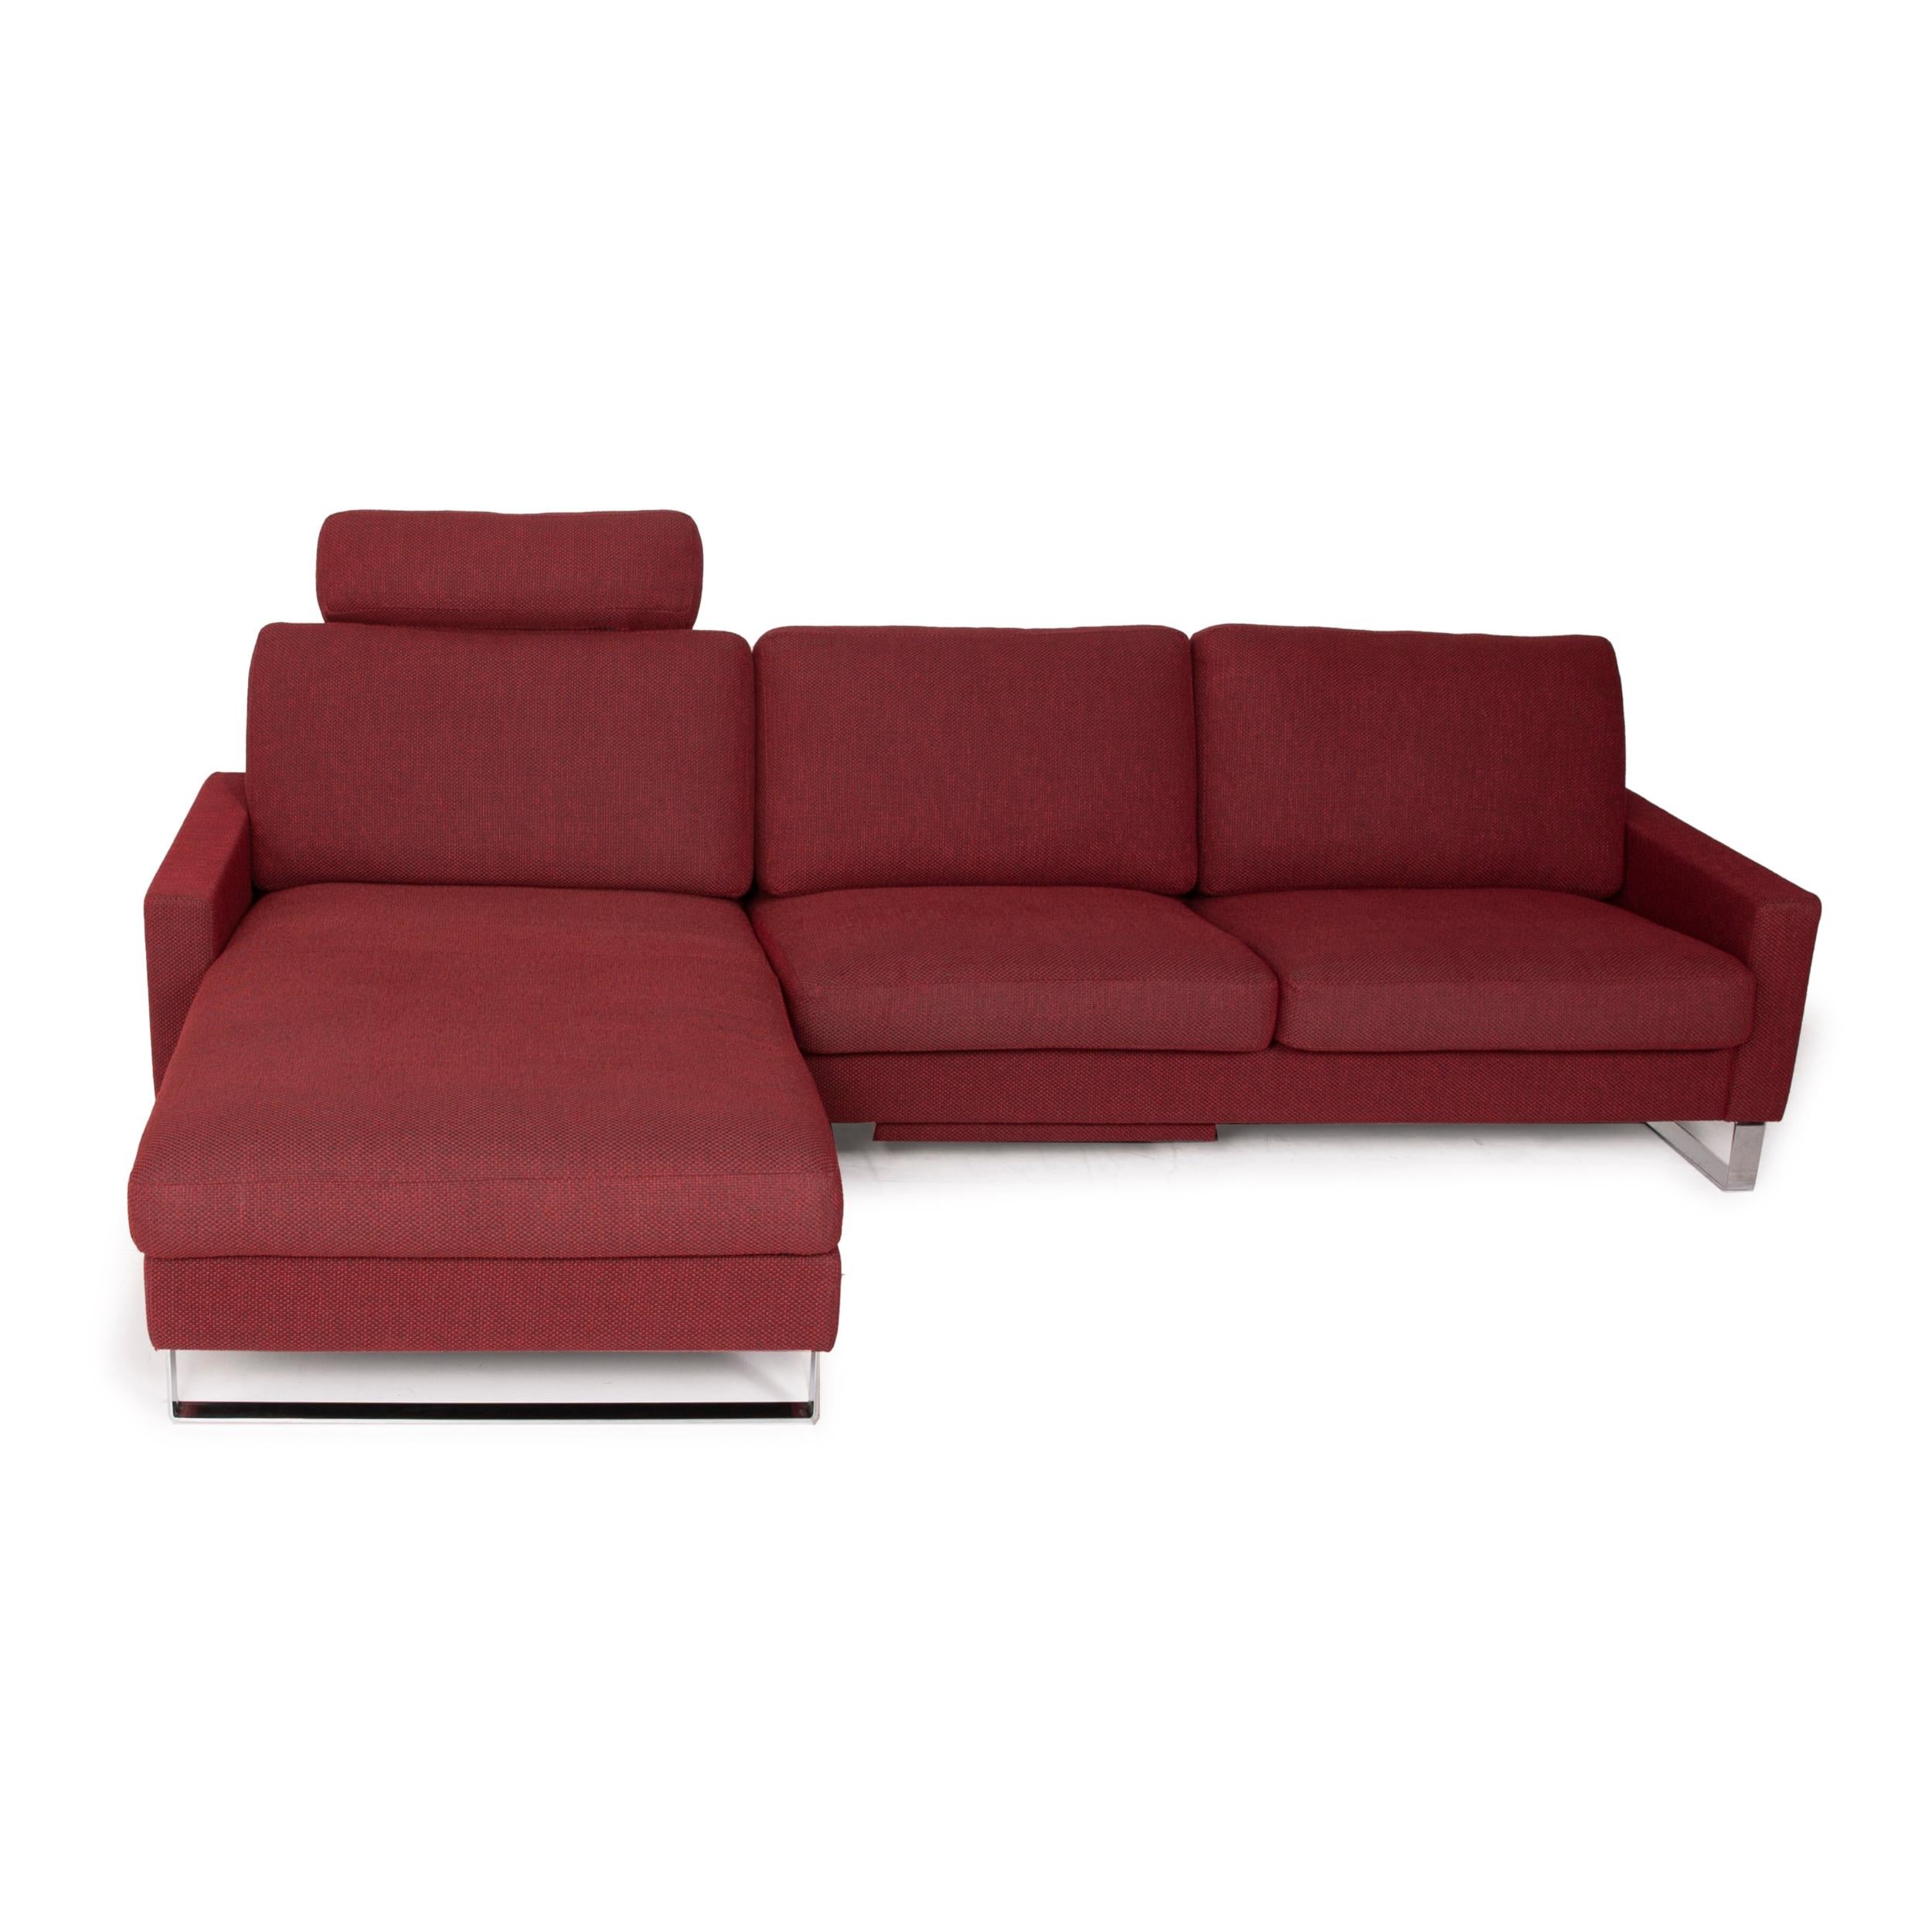 Erpo CL 500 Fabric Sofa Red Corner Sofa 1